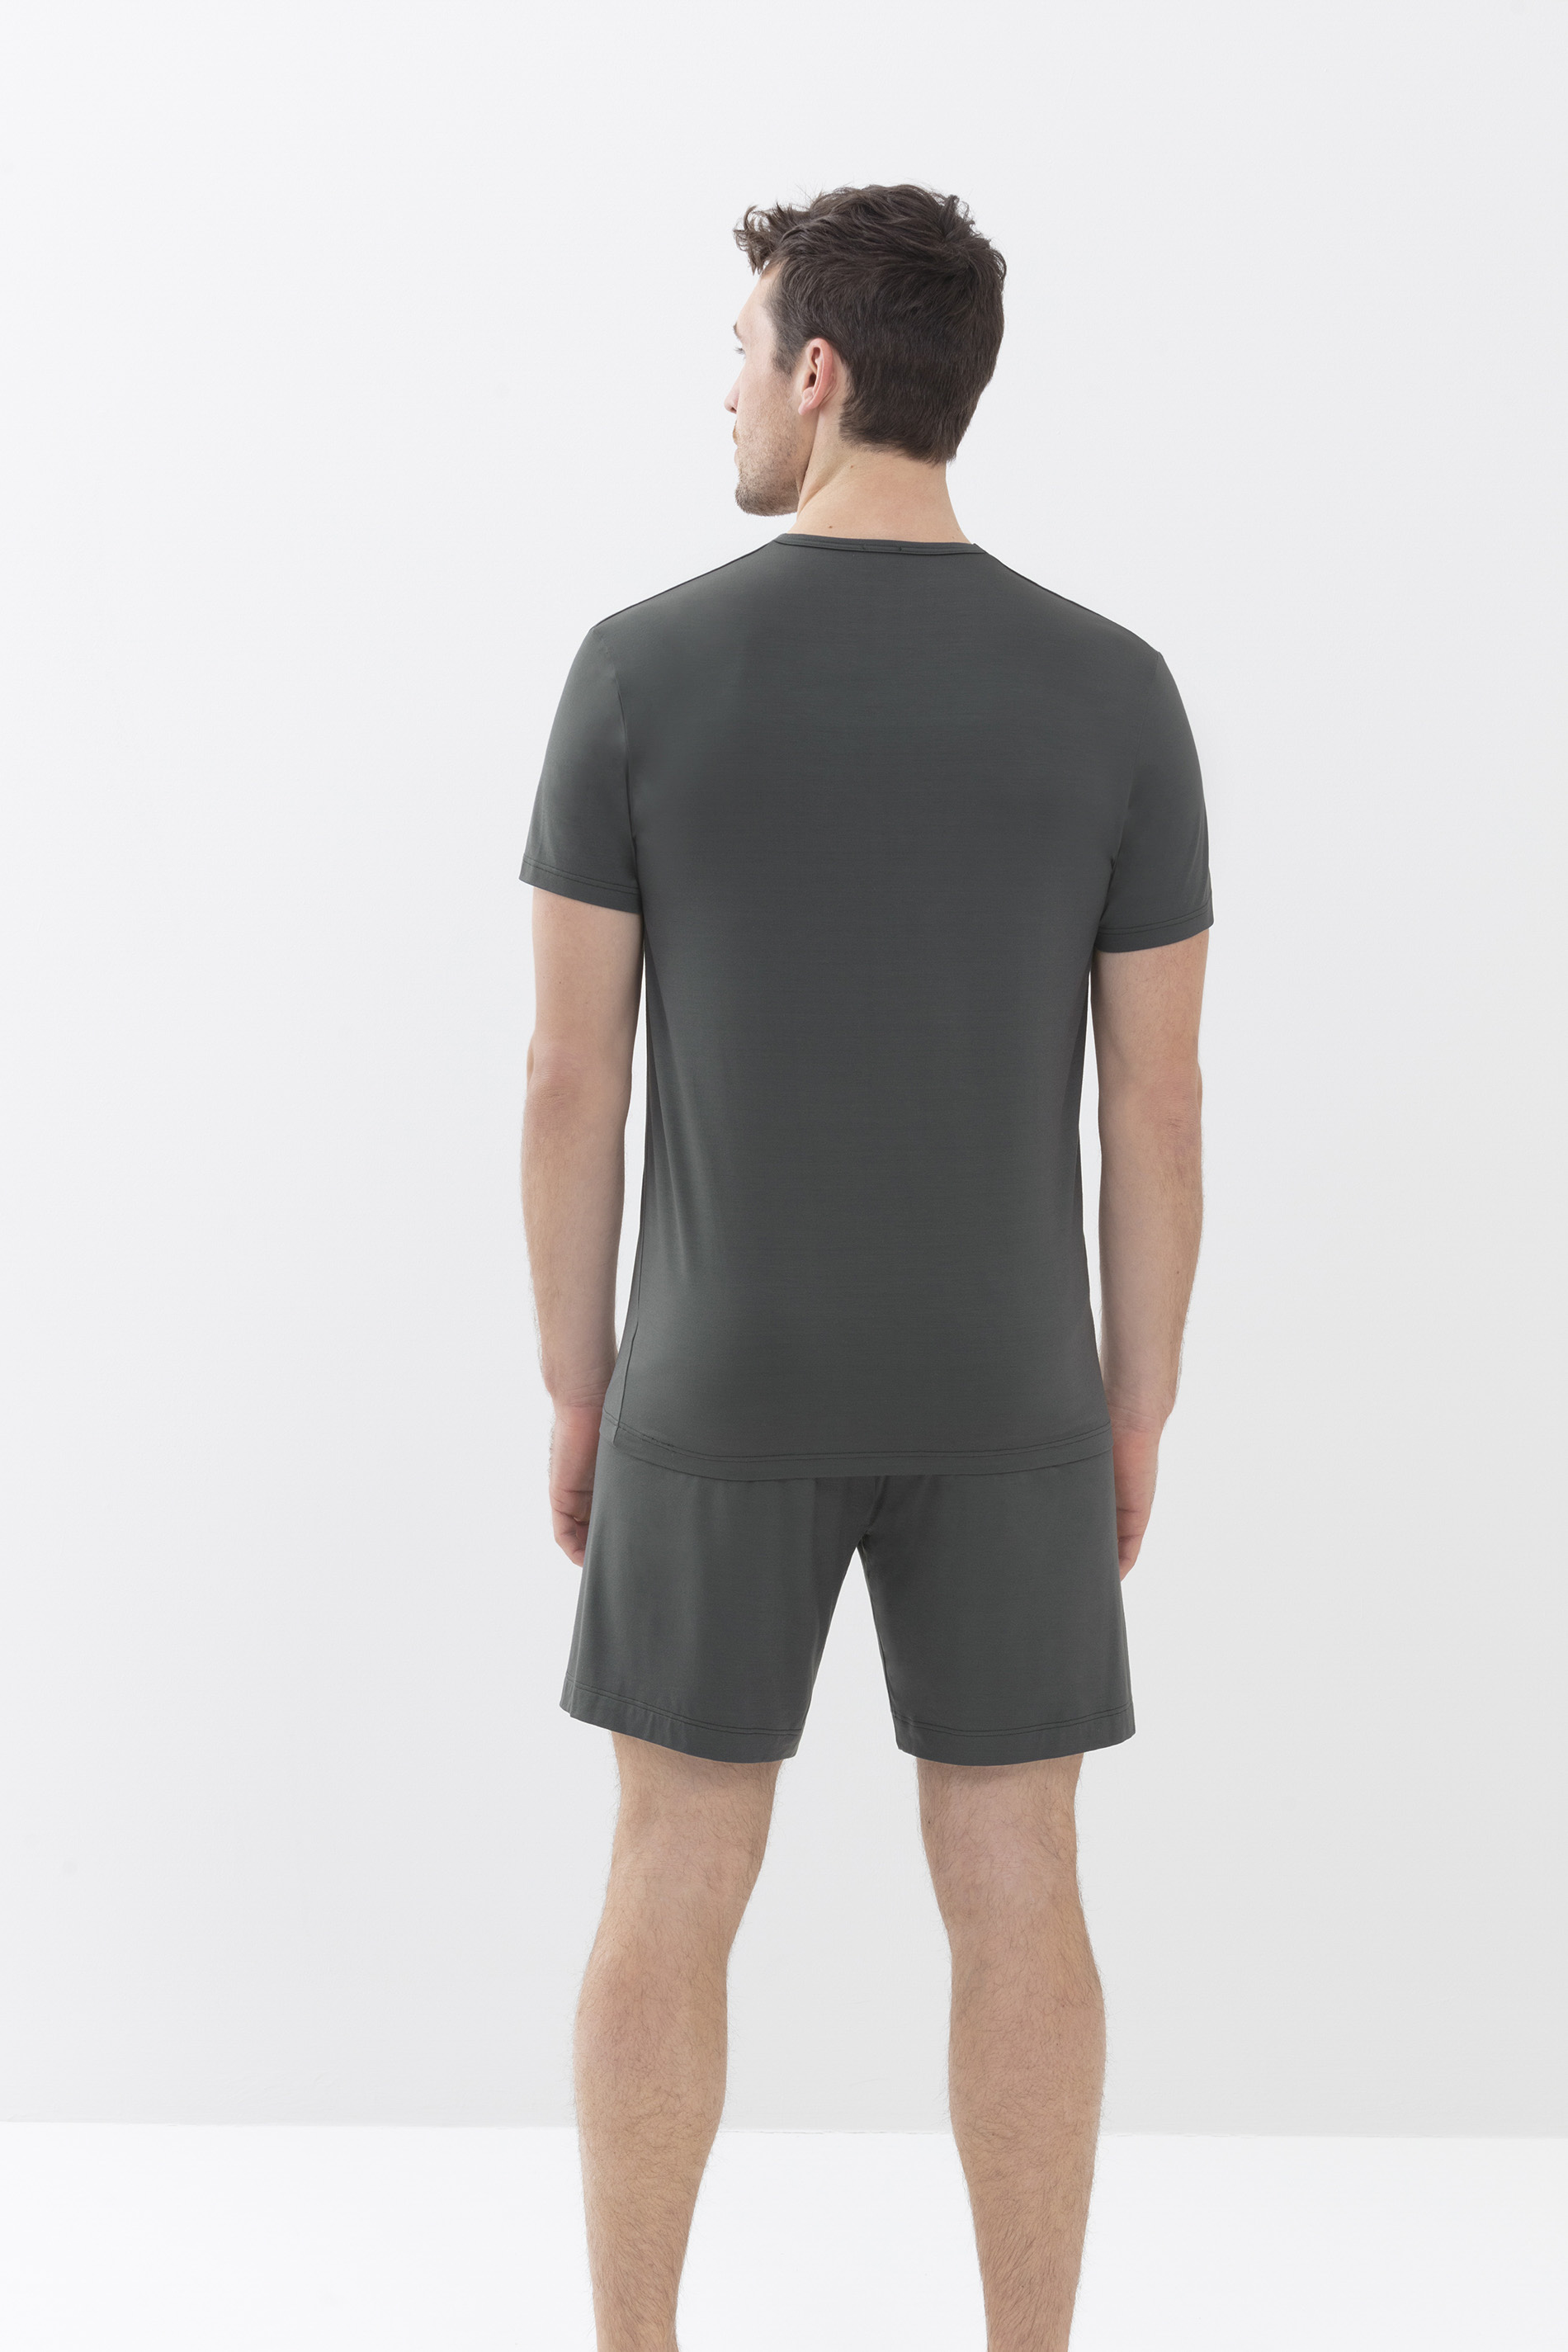 Shirt 1/2 sleeve Stormy Grey Serie Jefferson Modal Rear View | mey®